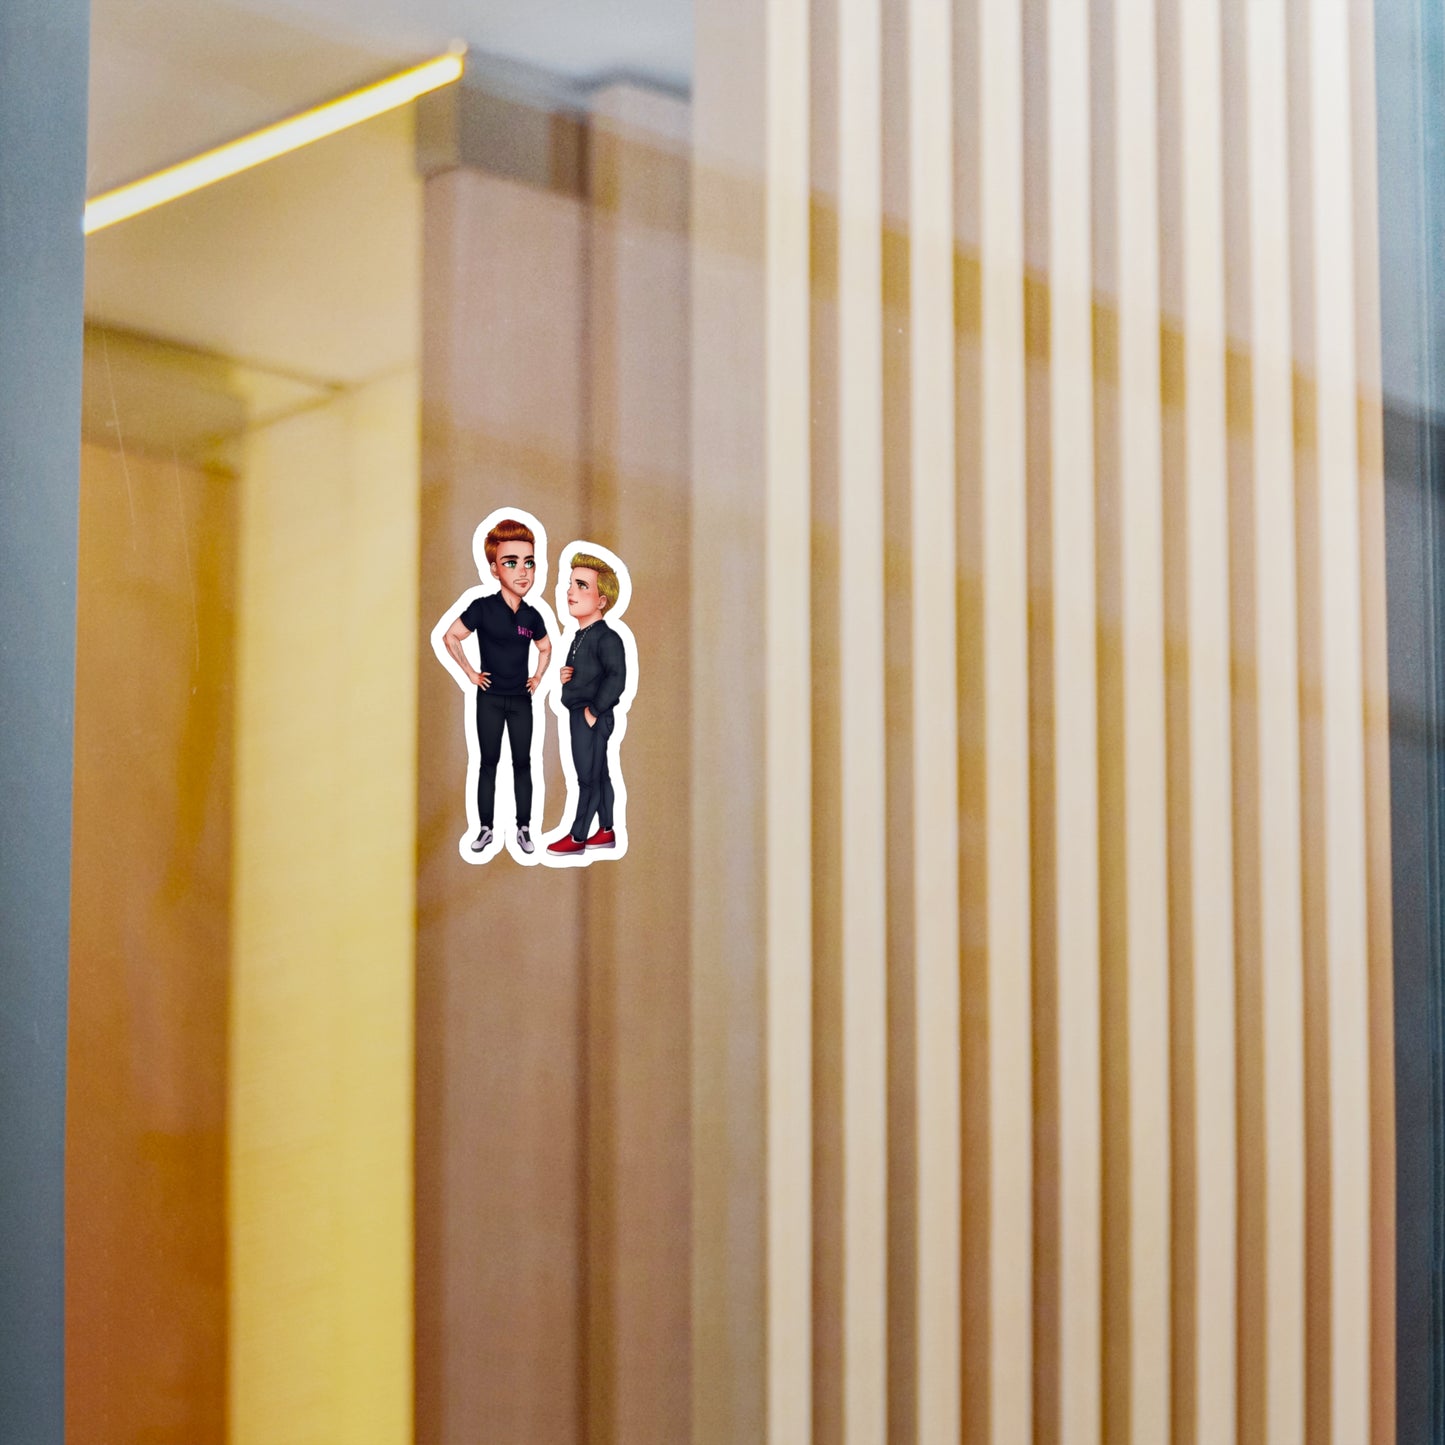 Caine & Logan Cut Out Sticker